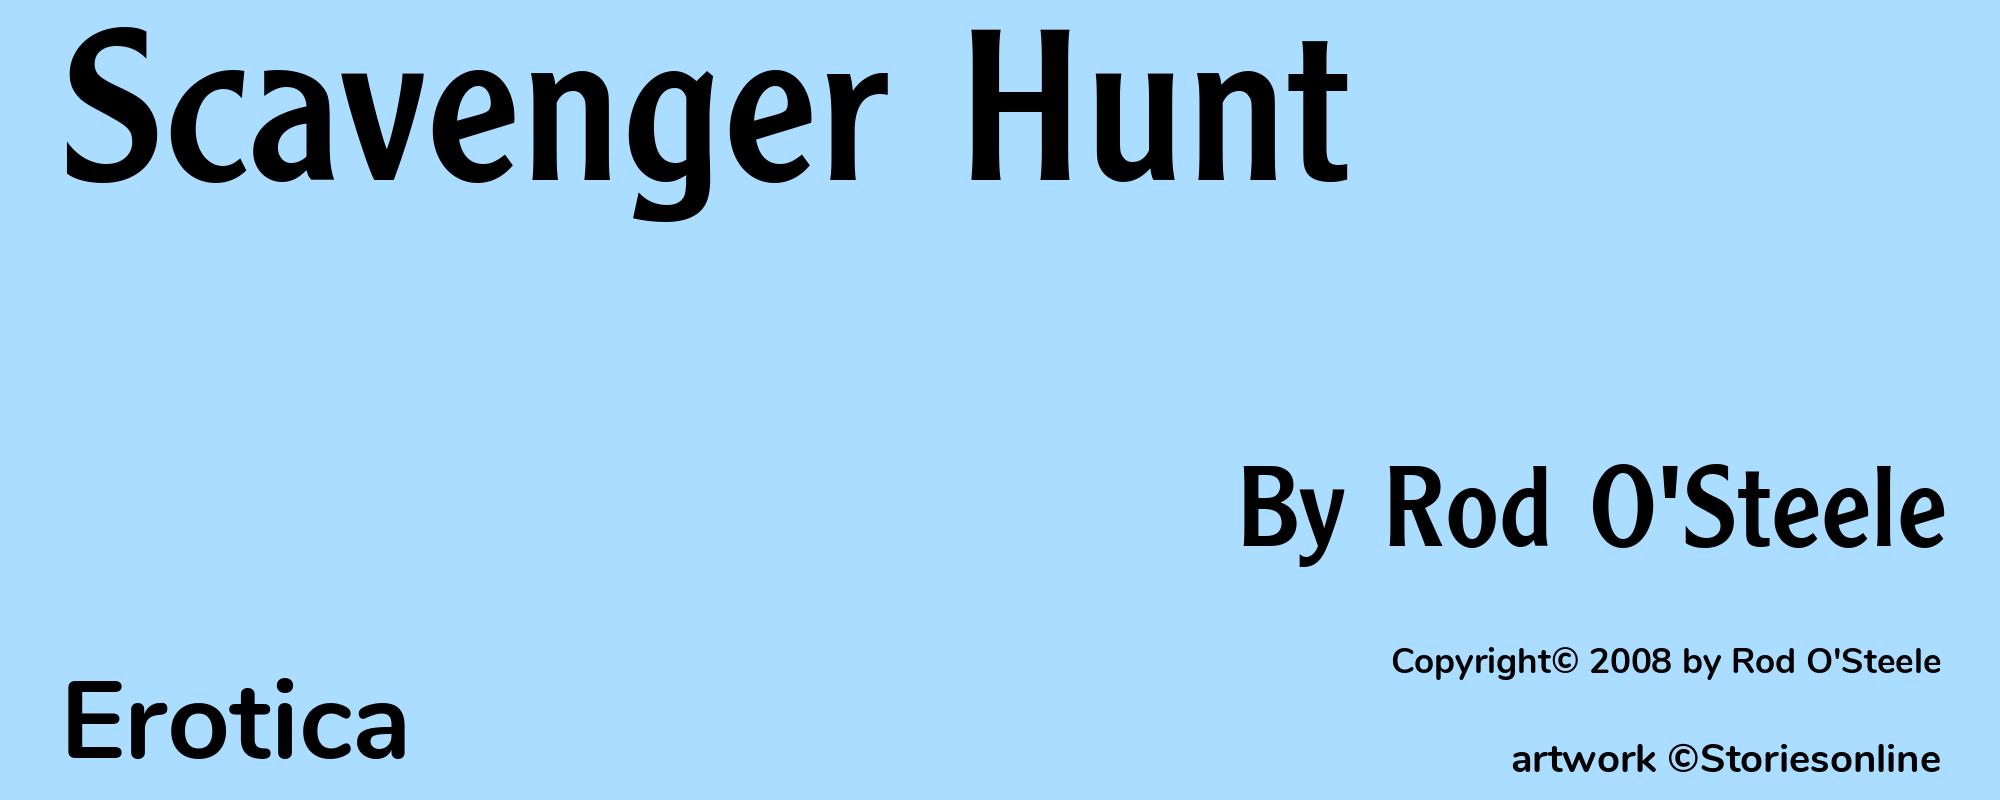 Scavenger Hunt - Cover